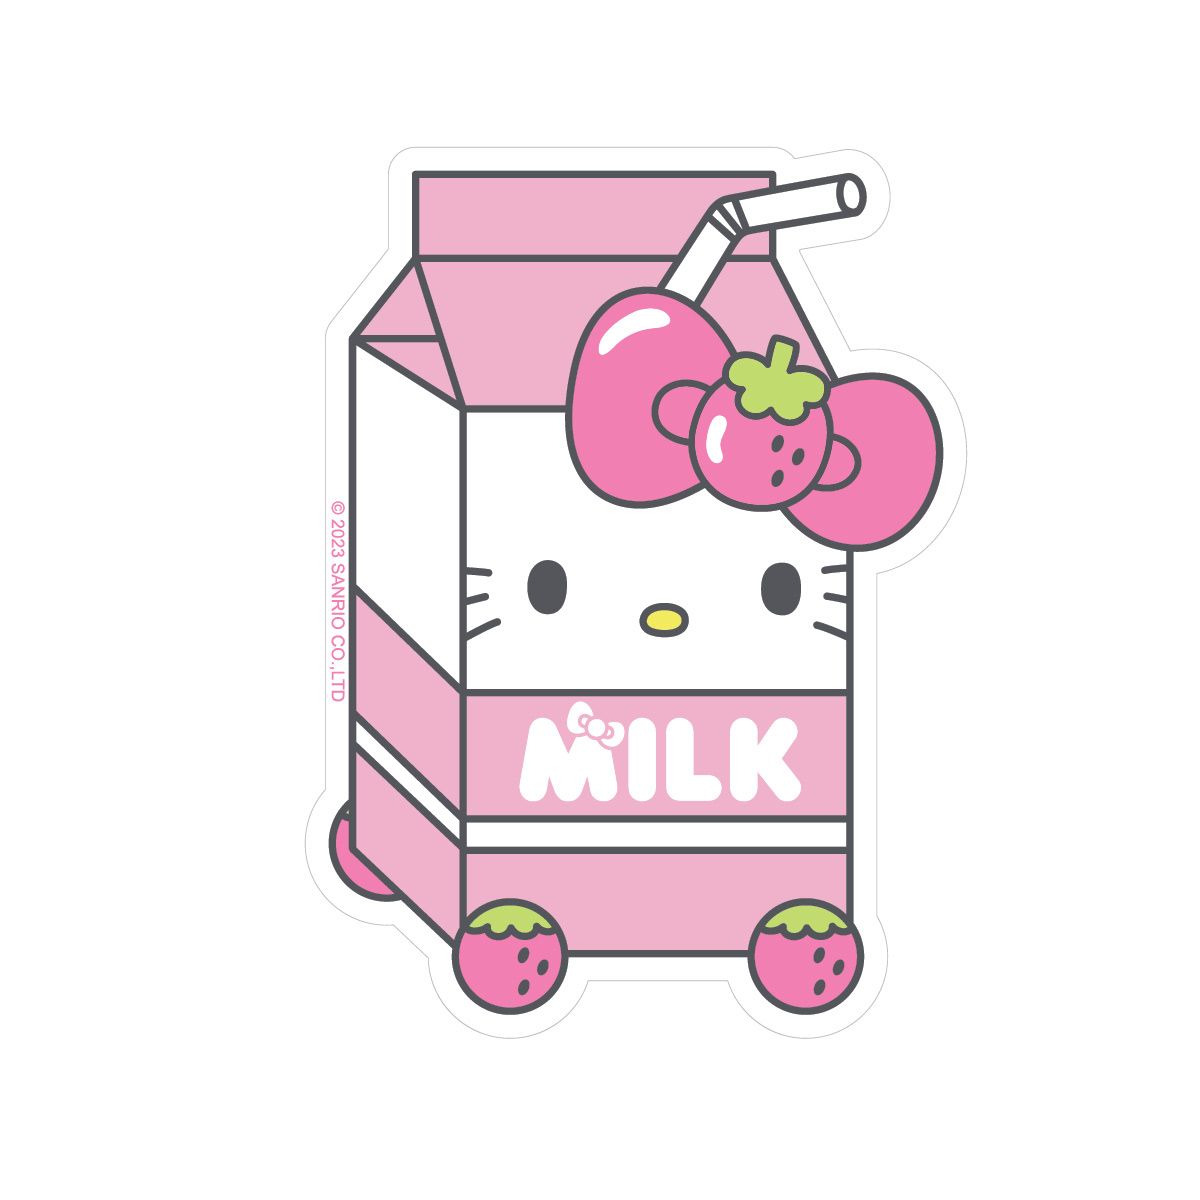 Hello Kitty Strawberry Sticker